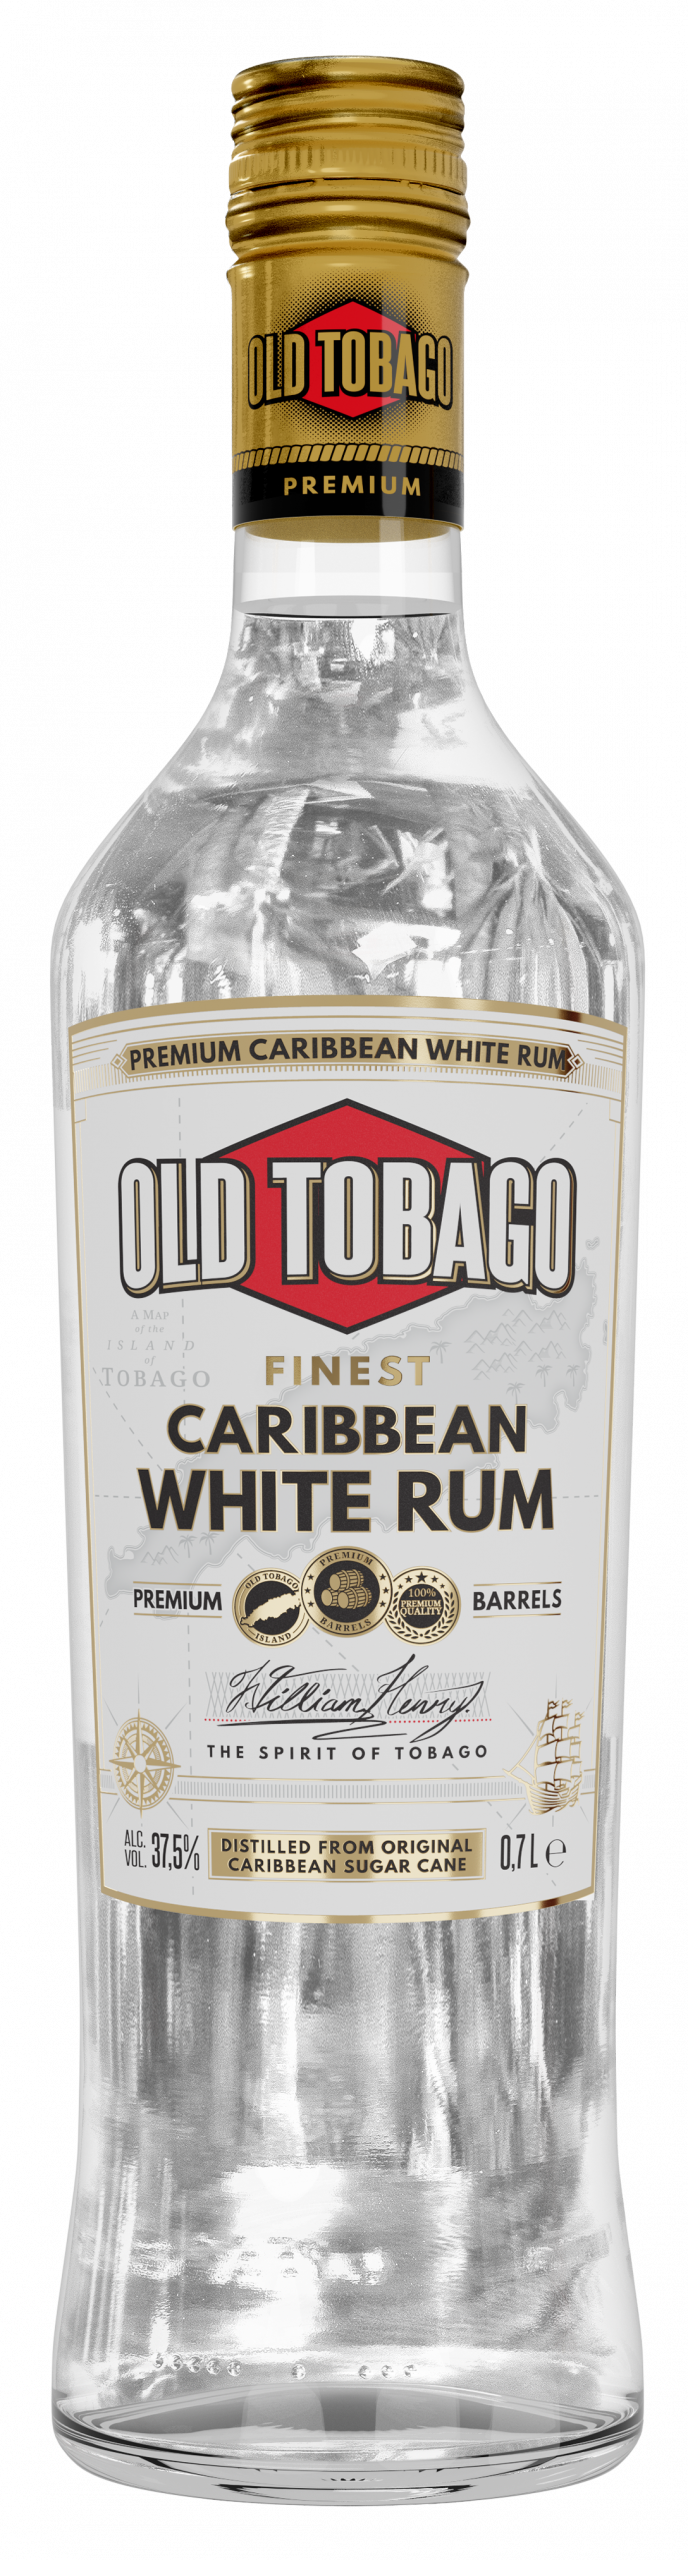 White rum